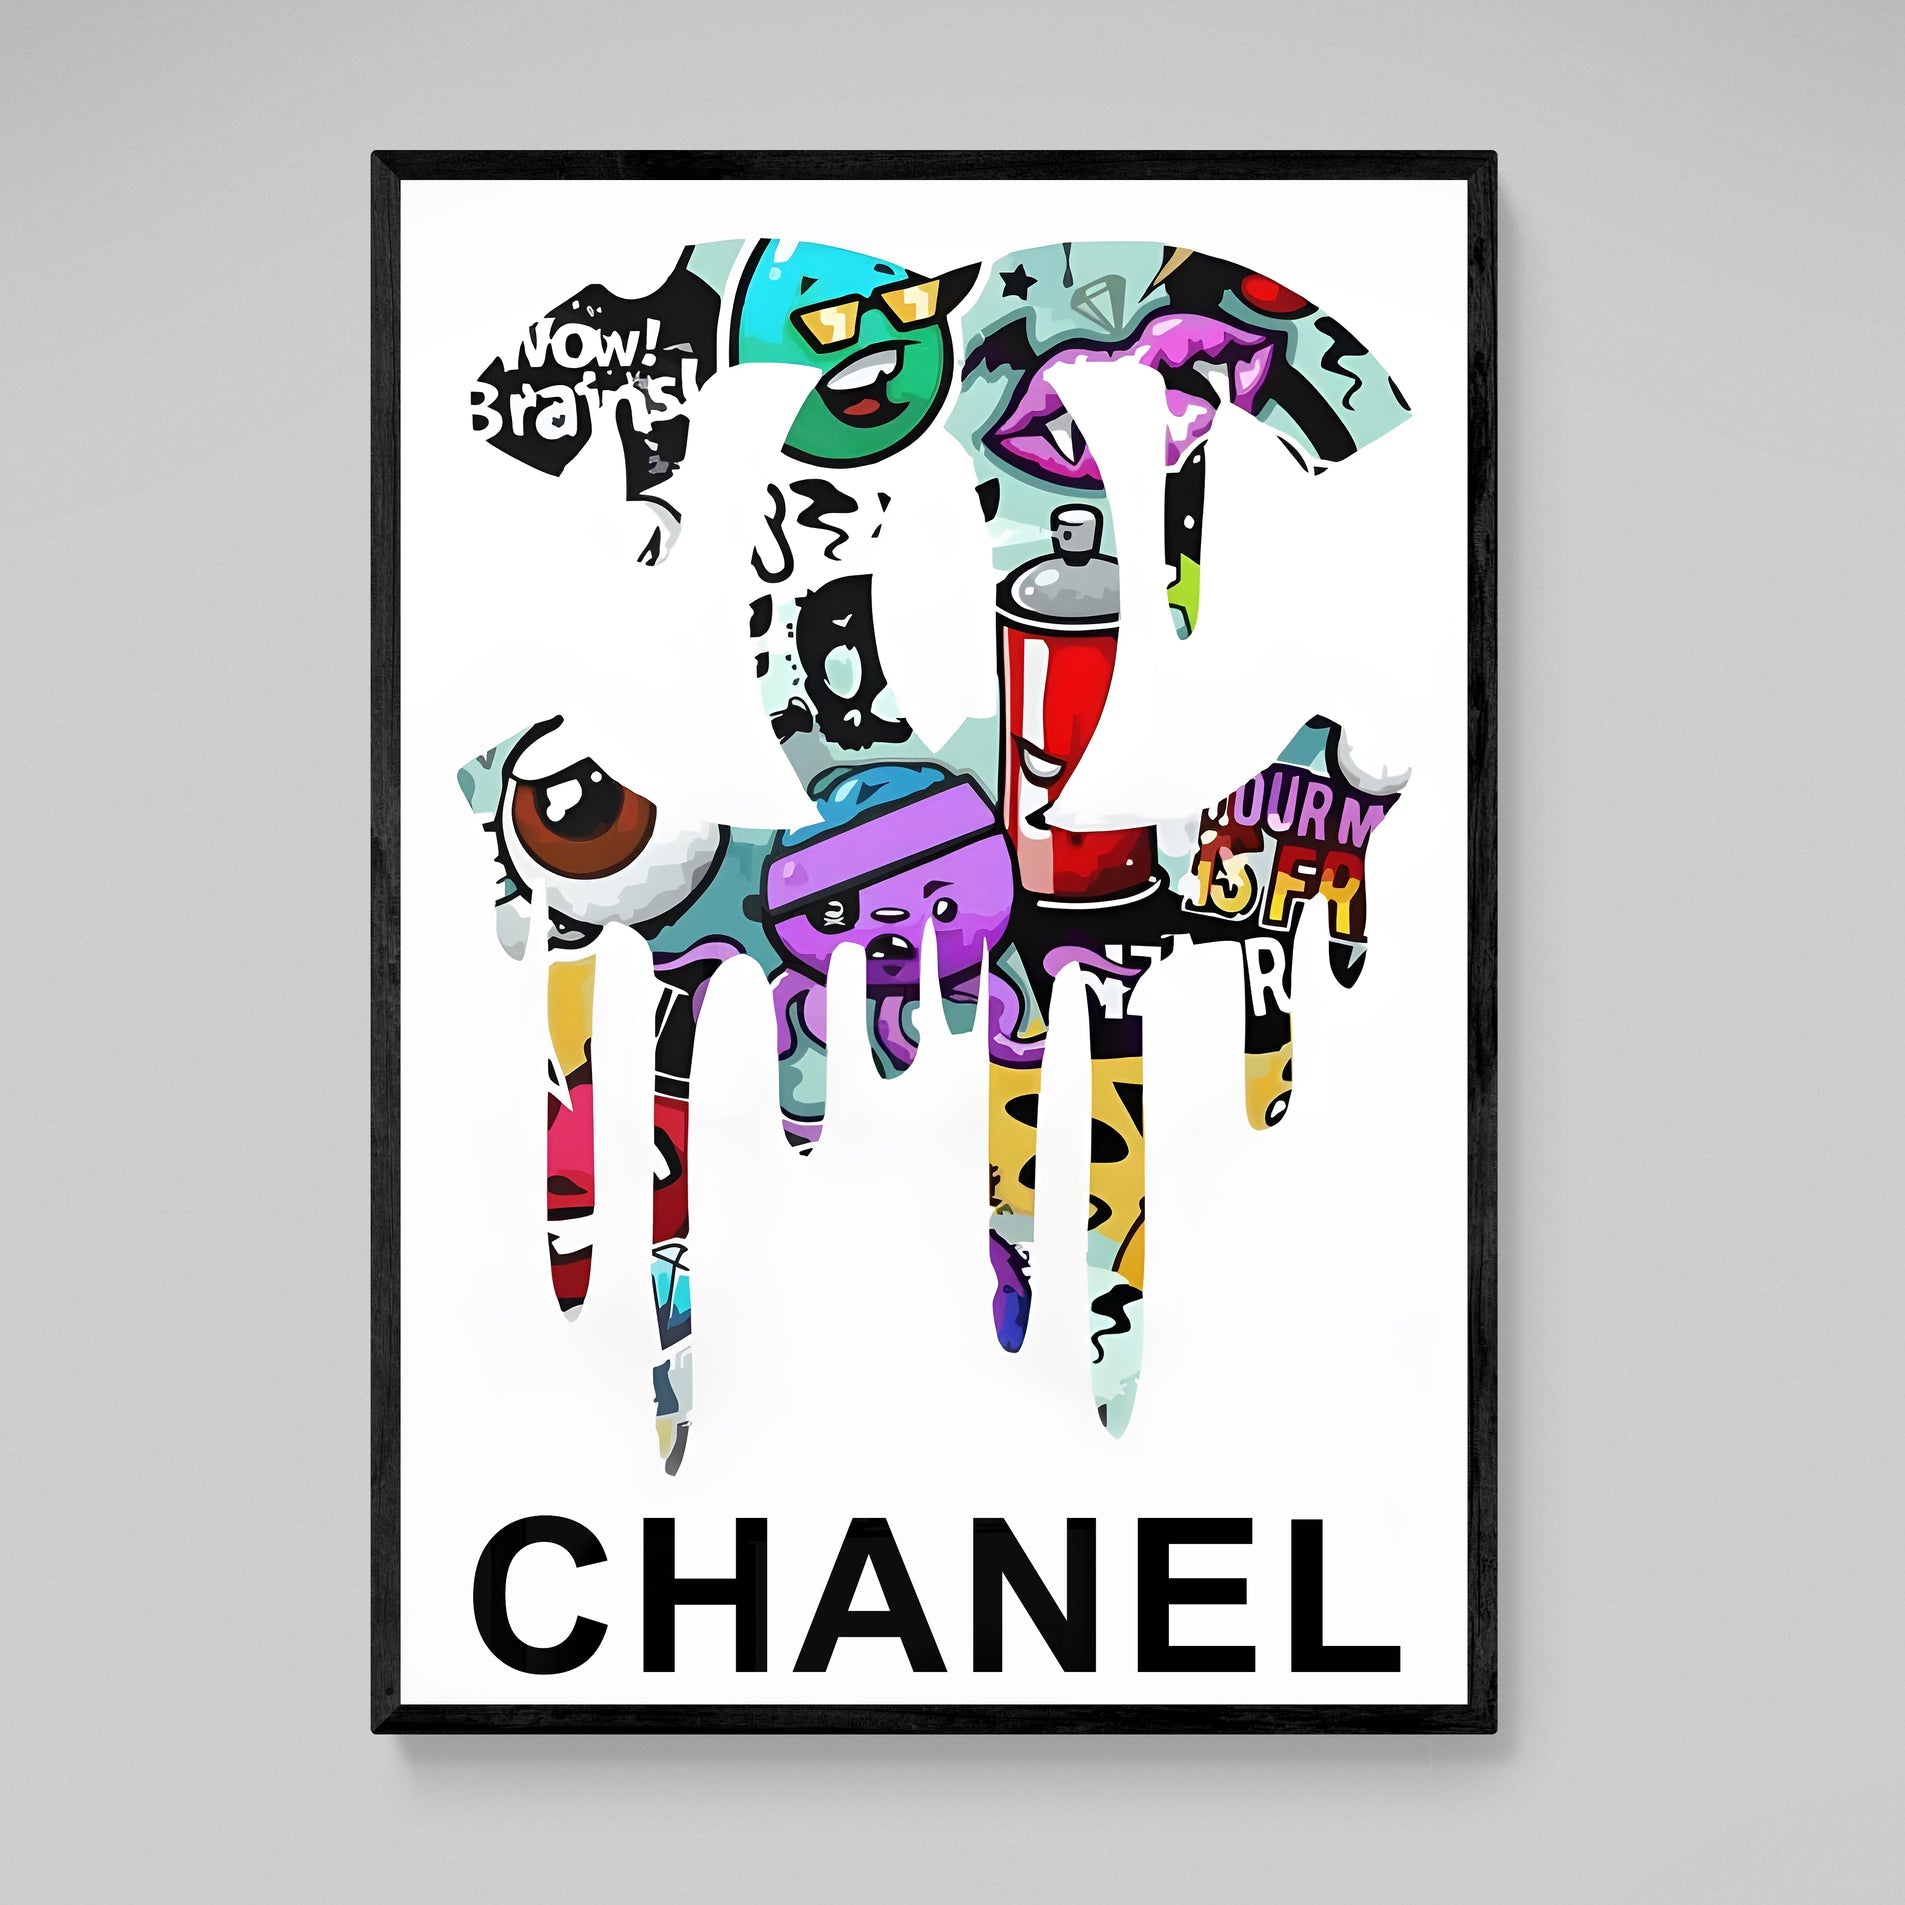 Urban Pop Art Chanel No 5 Painting by Jim Hudek